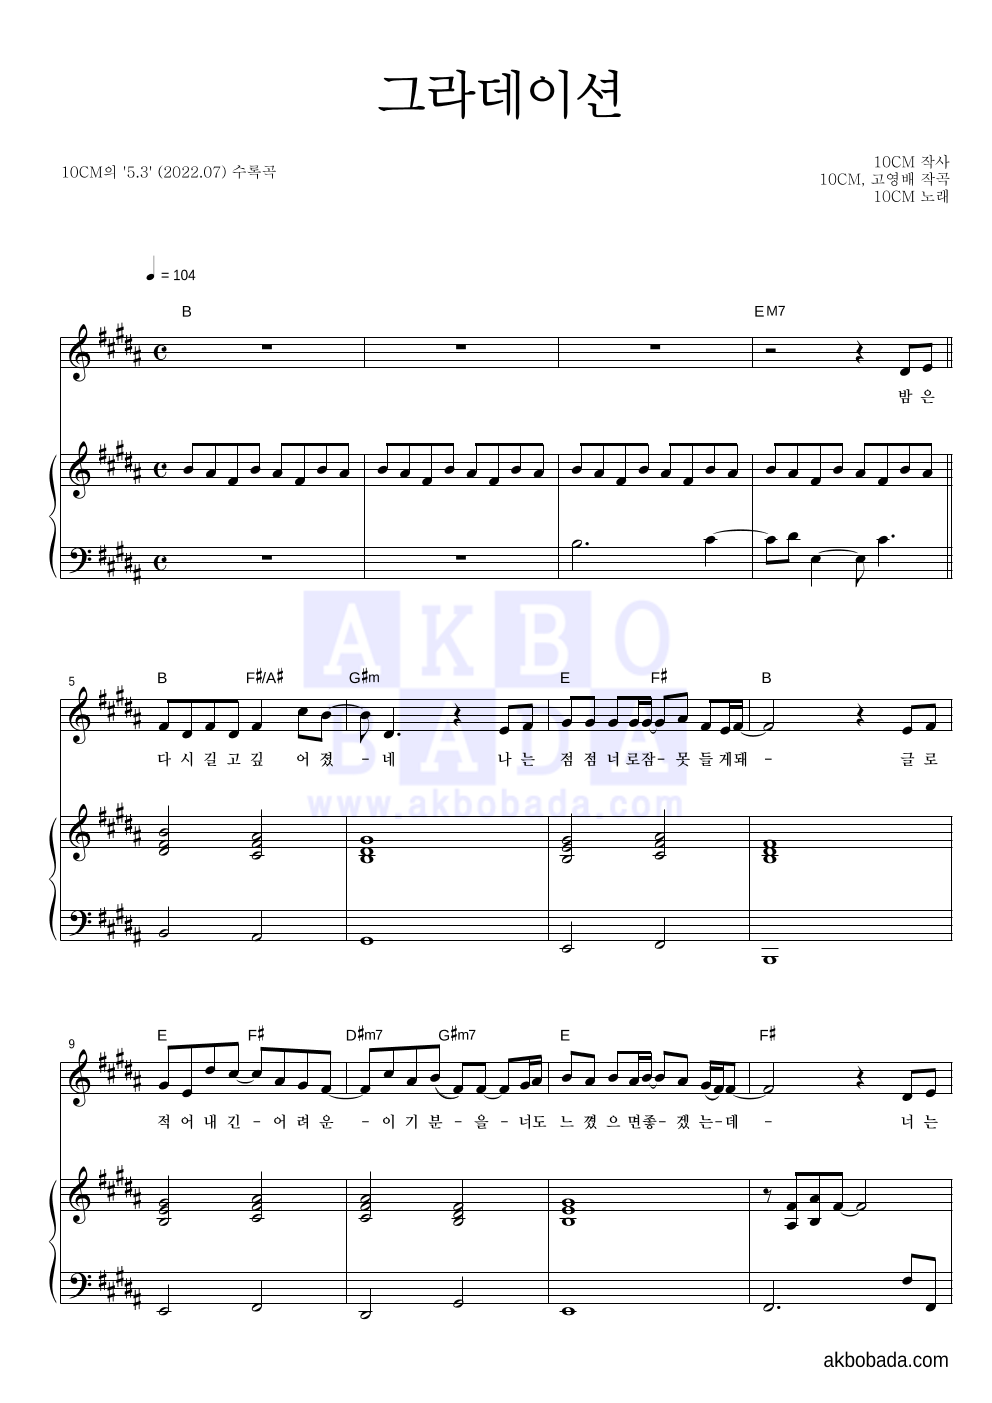 10CM - 그라데이션 피아노 3단 악보 